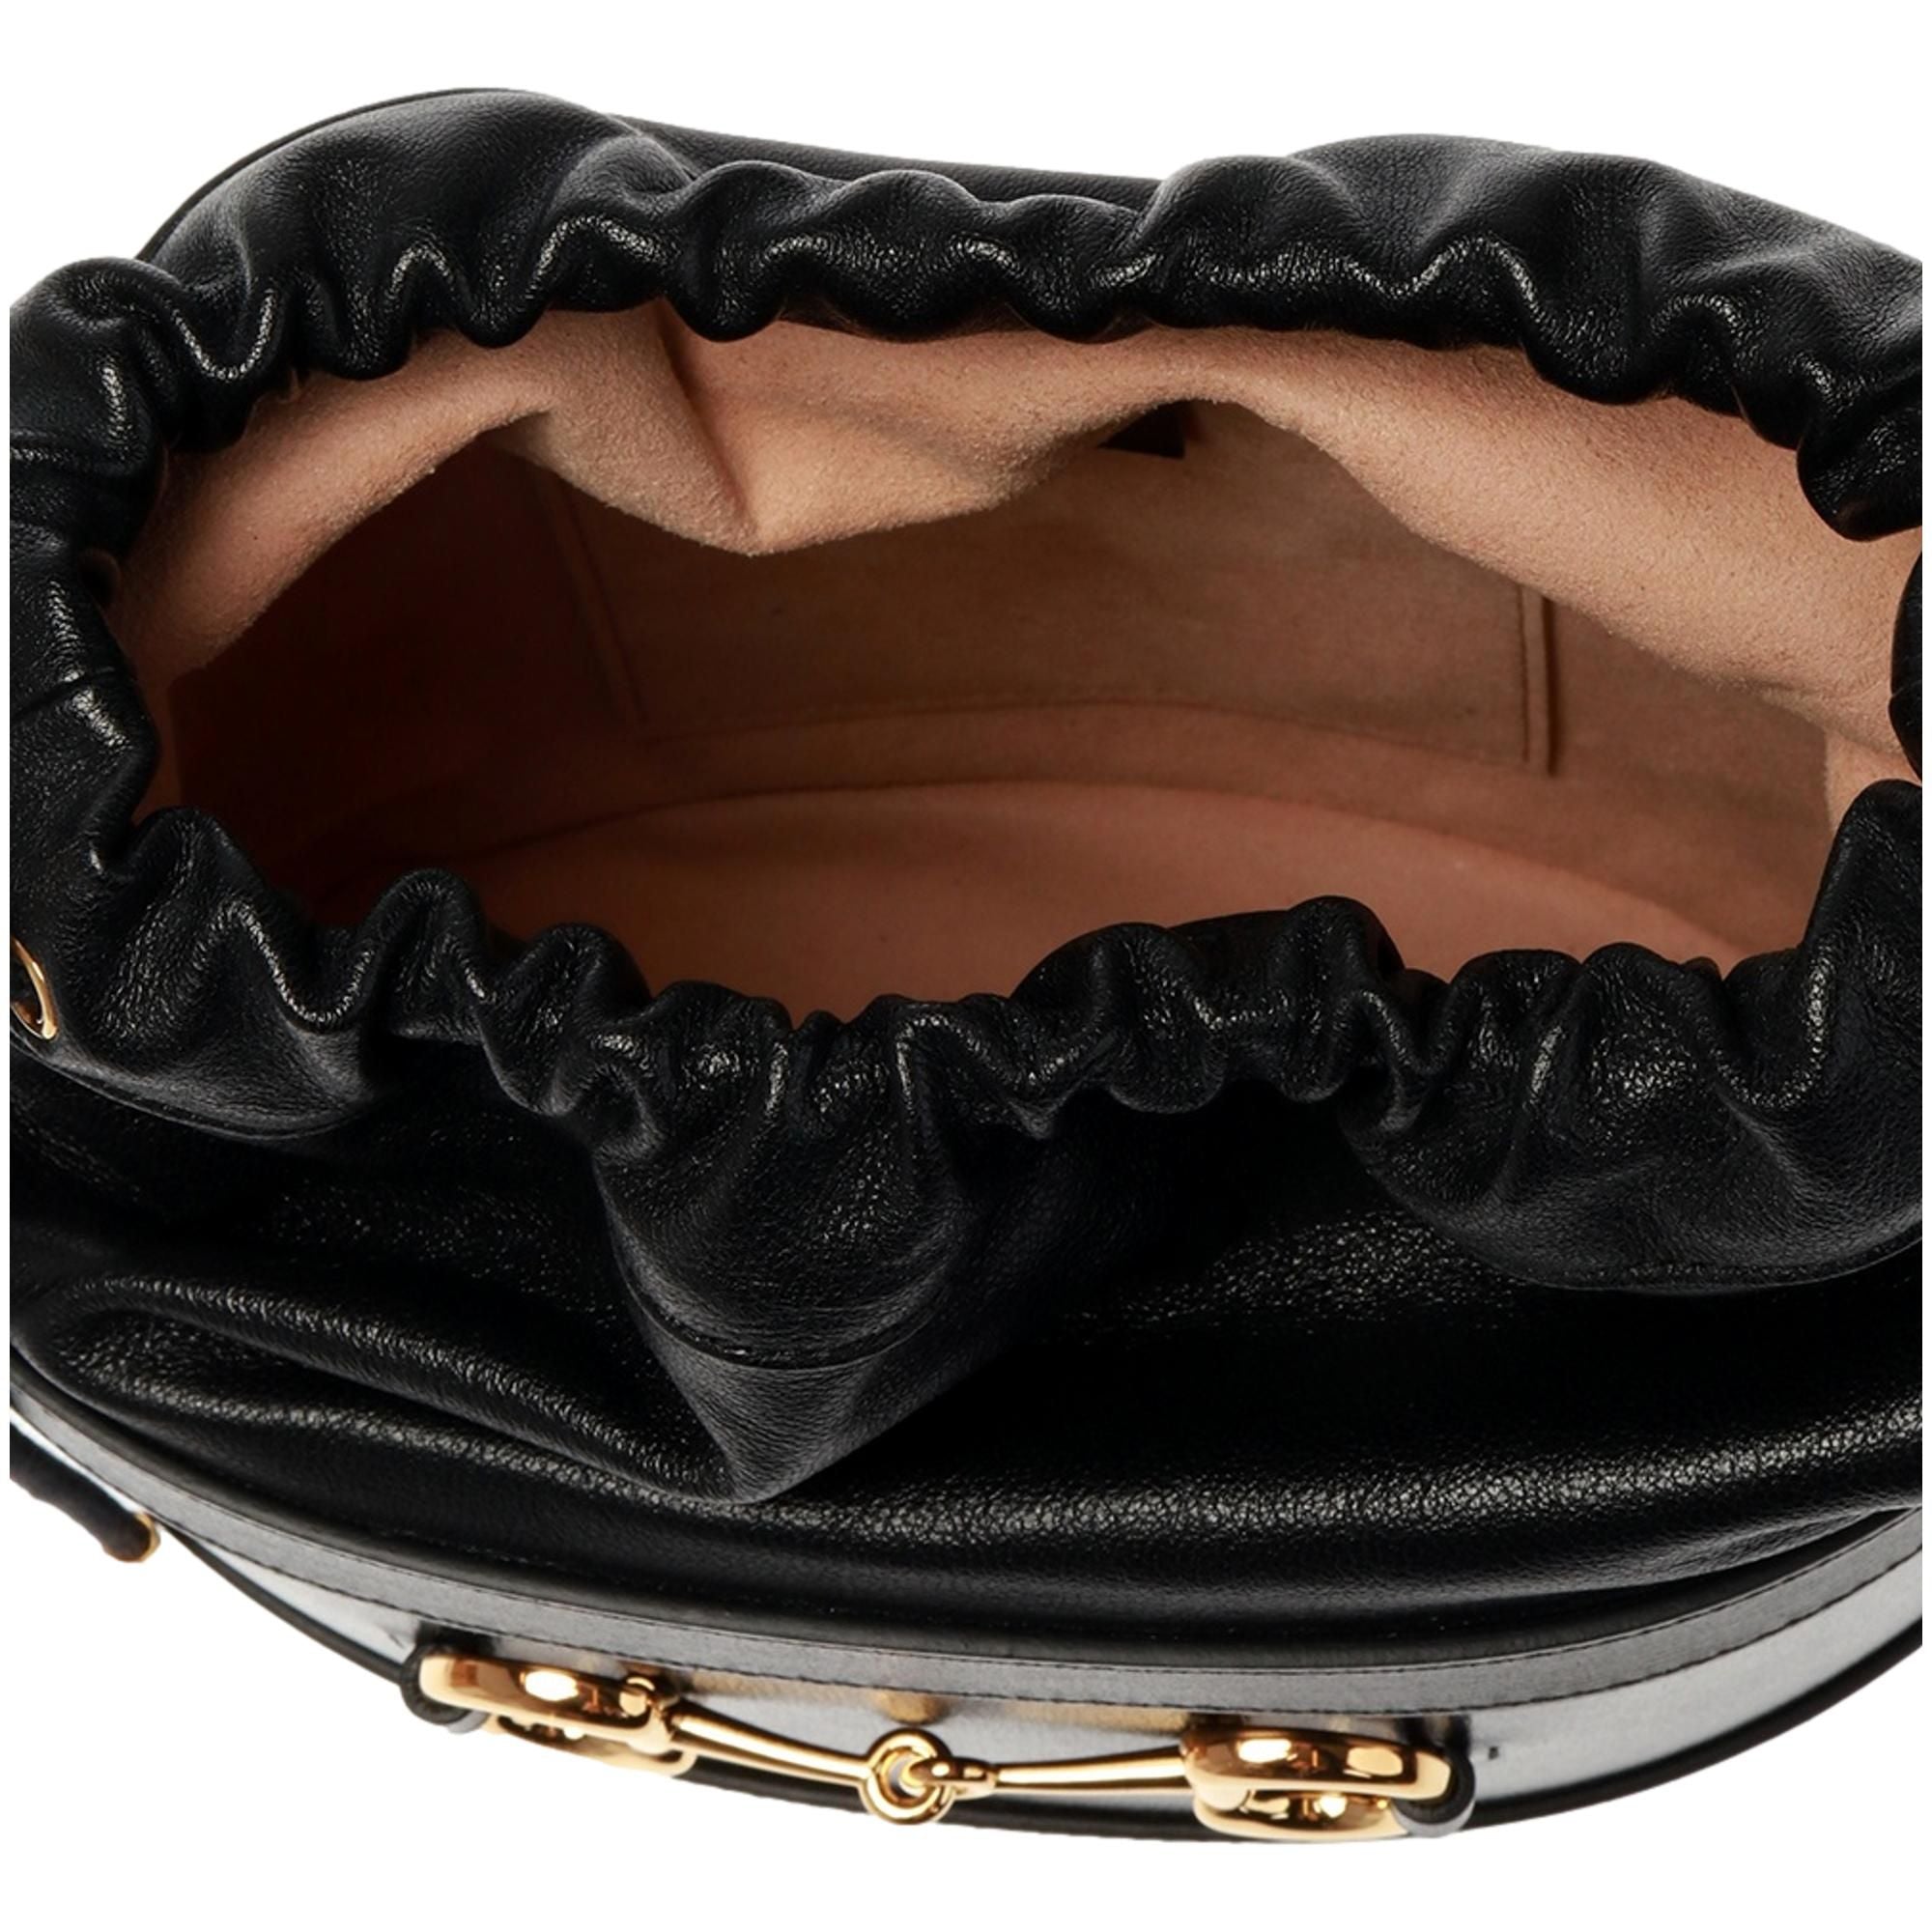 Gucci 1955 Horsebit Black Leather Bucket Bag 602118 at_Queen_Bee_of_Beverly_Hills